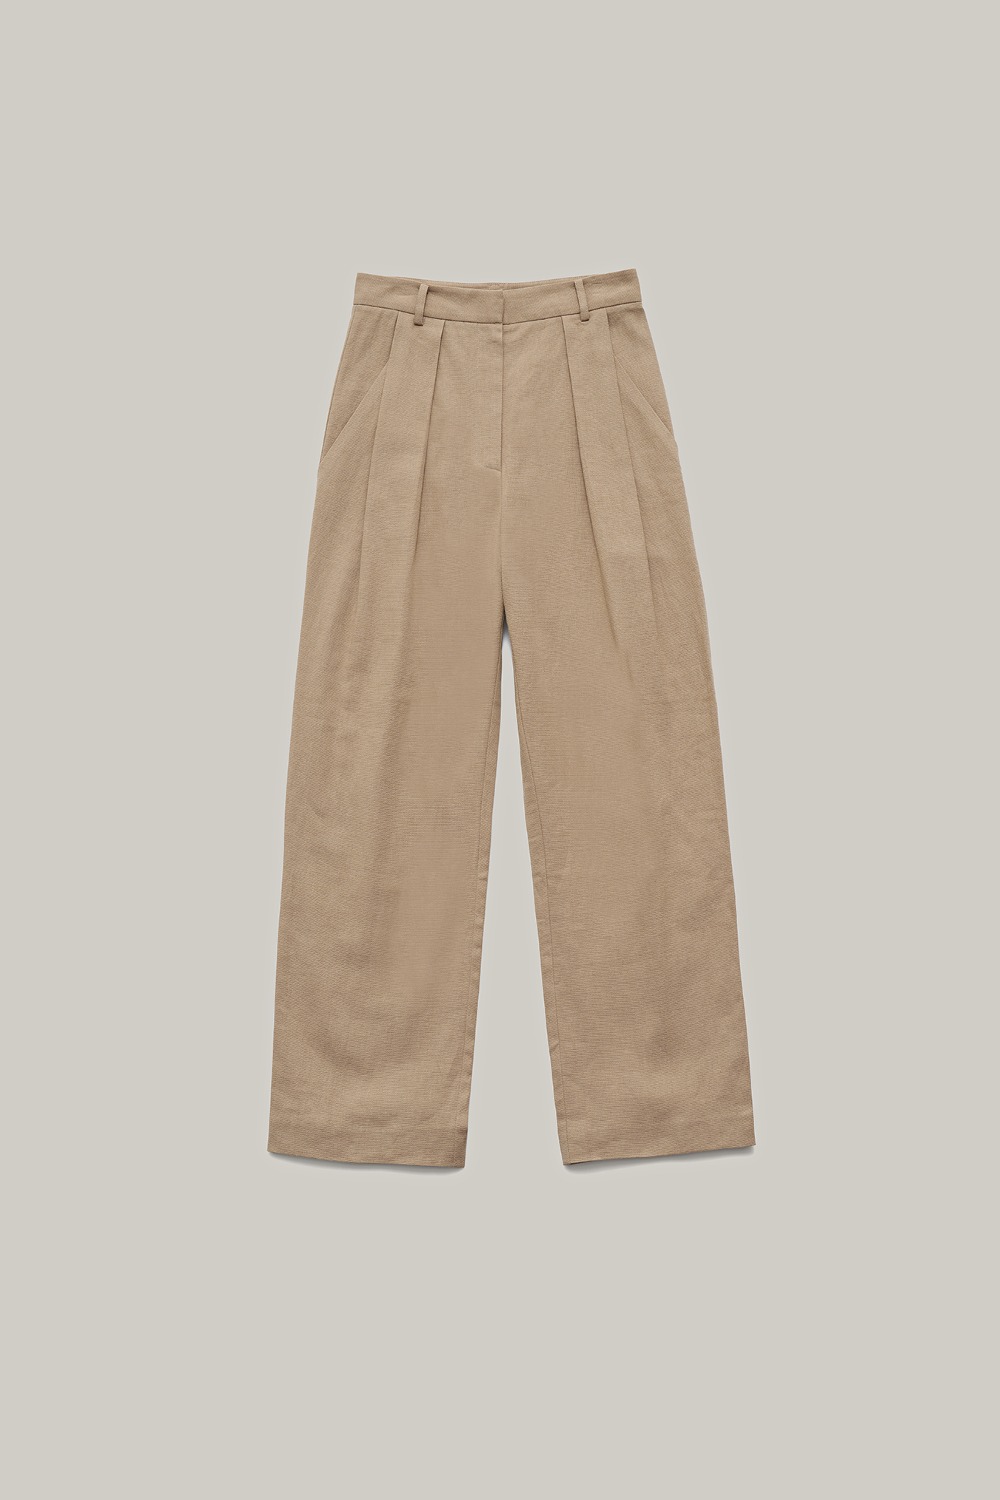 Knotted linen slacks (Khaki)